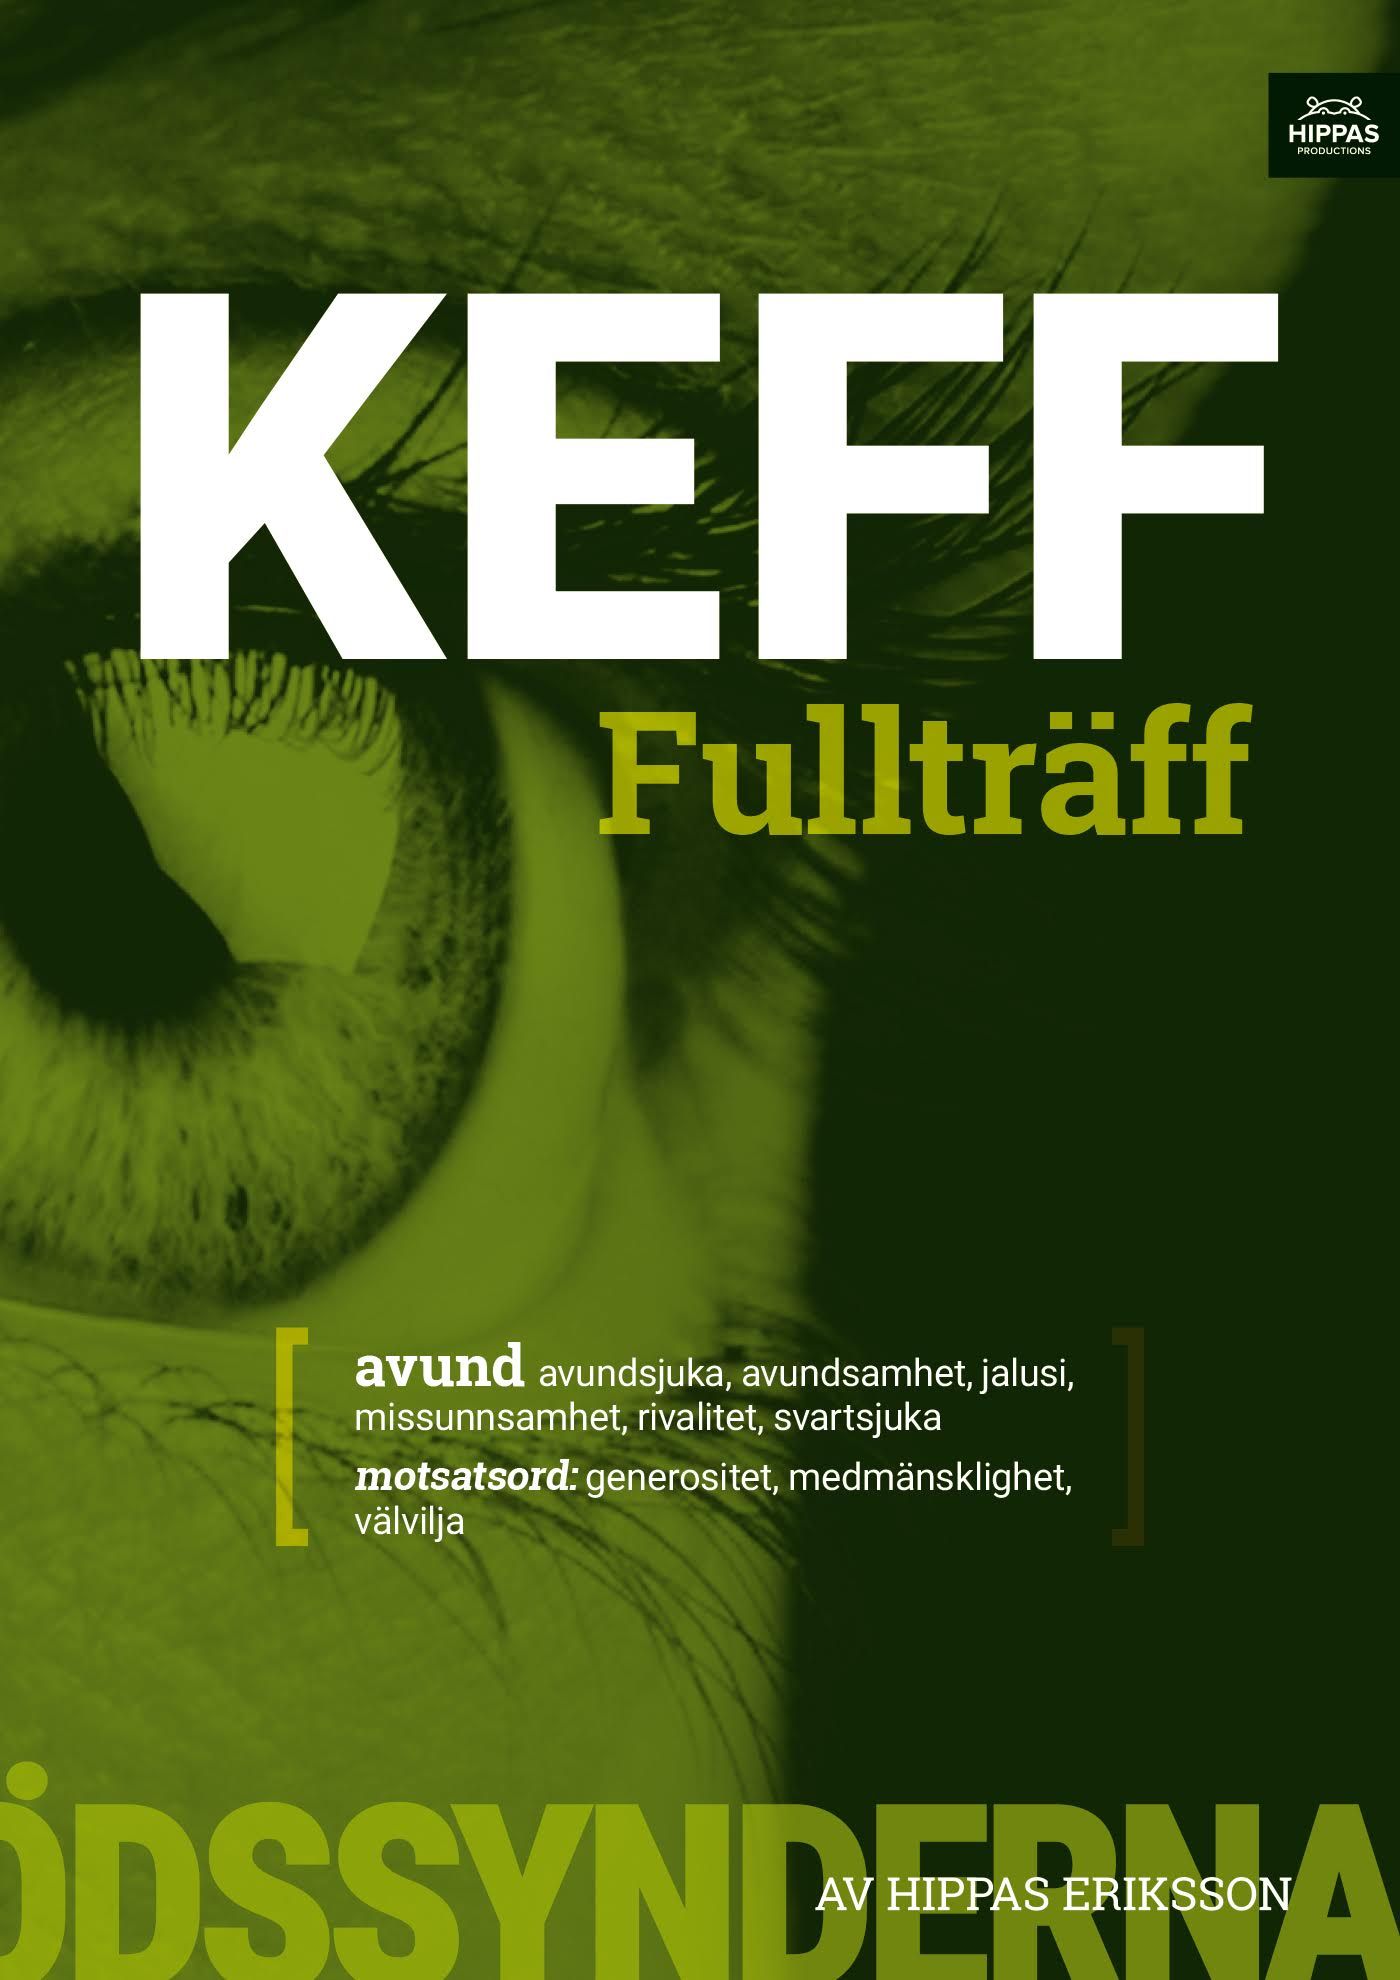 Keff fullträff, audiobook by Hippas Eriksson